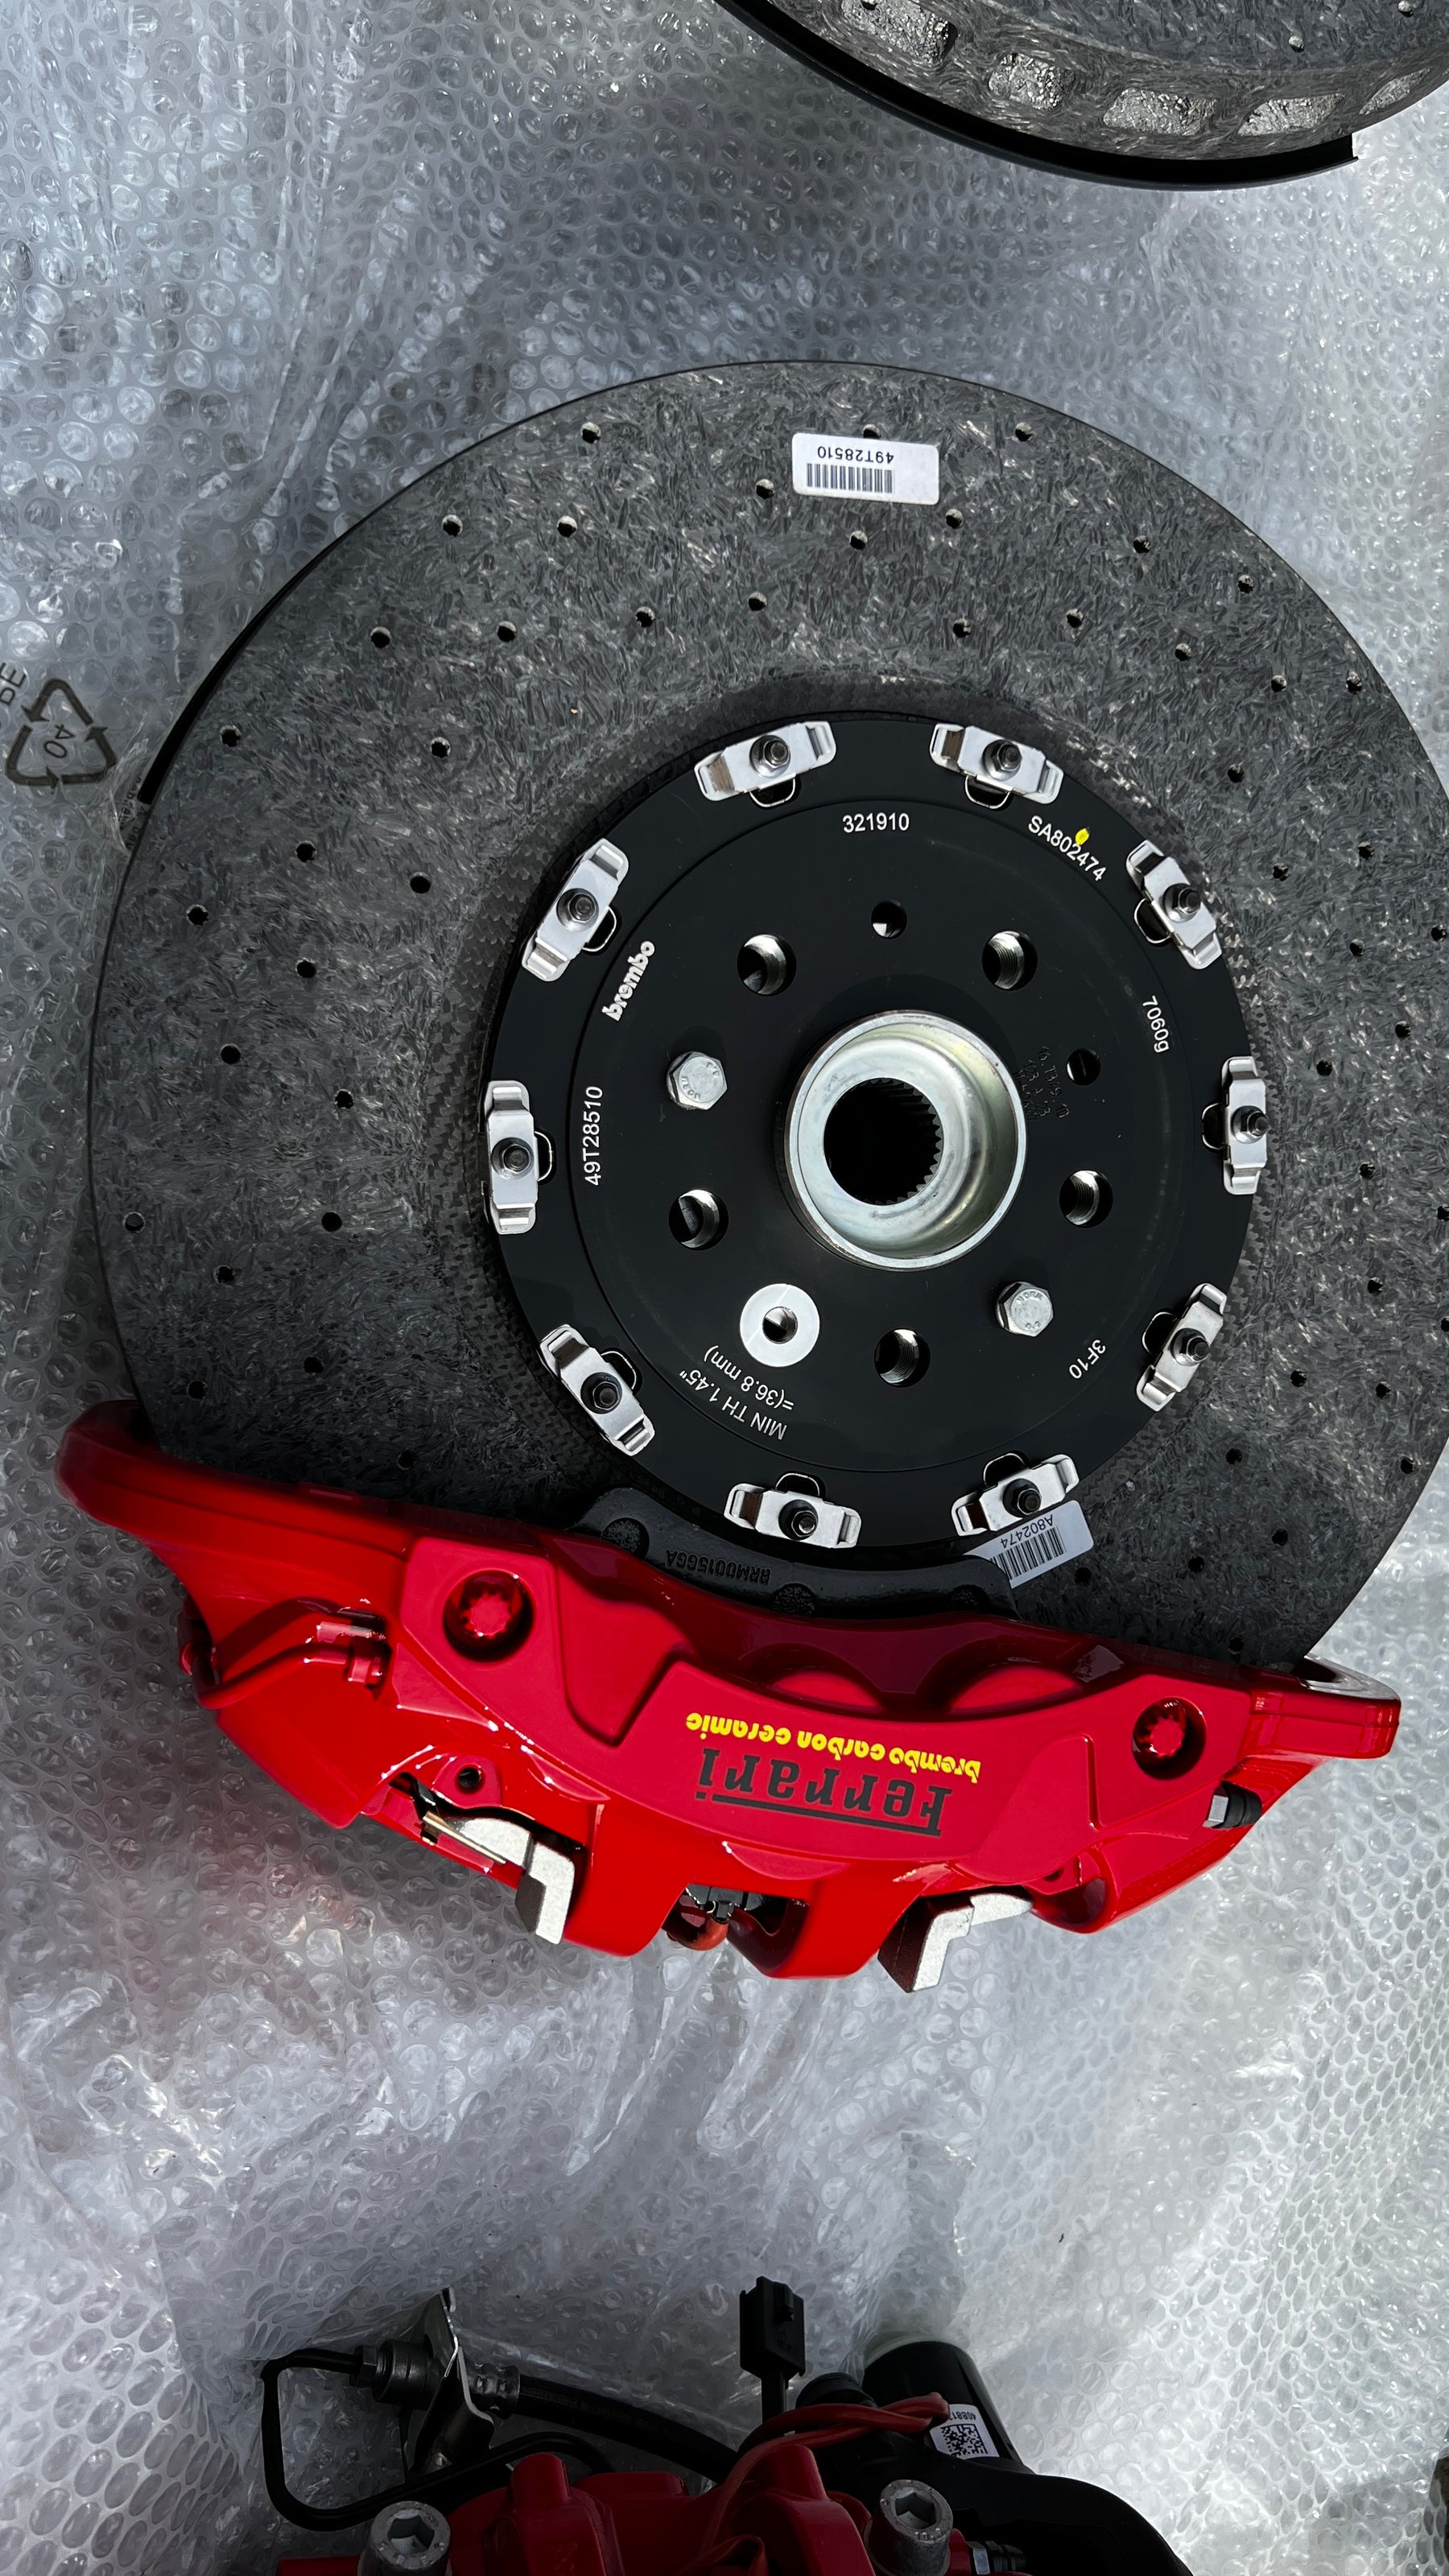 Ferrari F8 Tributo 488 Brake Set Complete Ceramic, OEM, Part number: